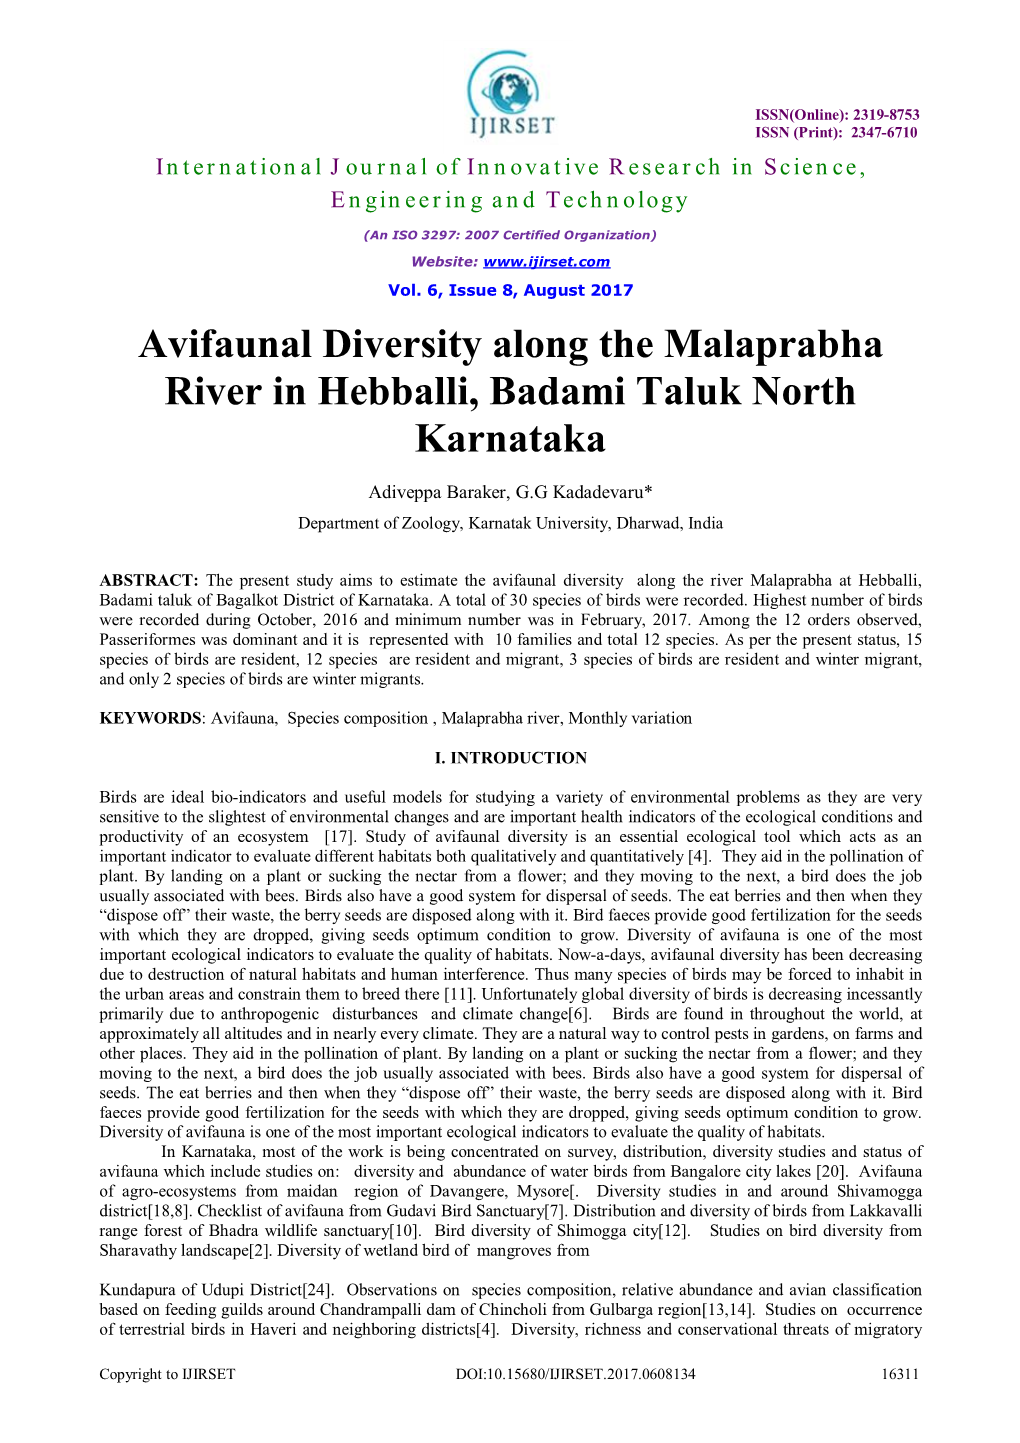 Avifaunal Diversity Along the Malaprabha River in Hebballi, Badami Taluk North Karnataka